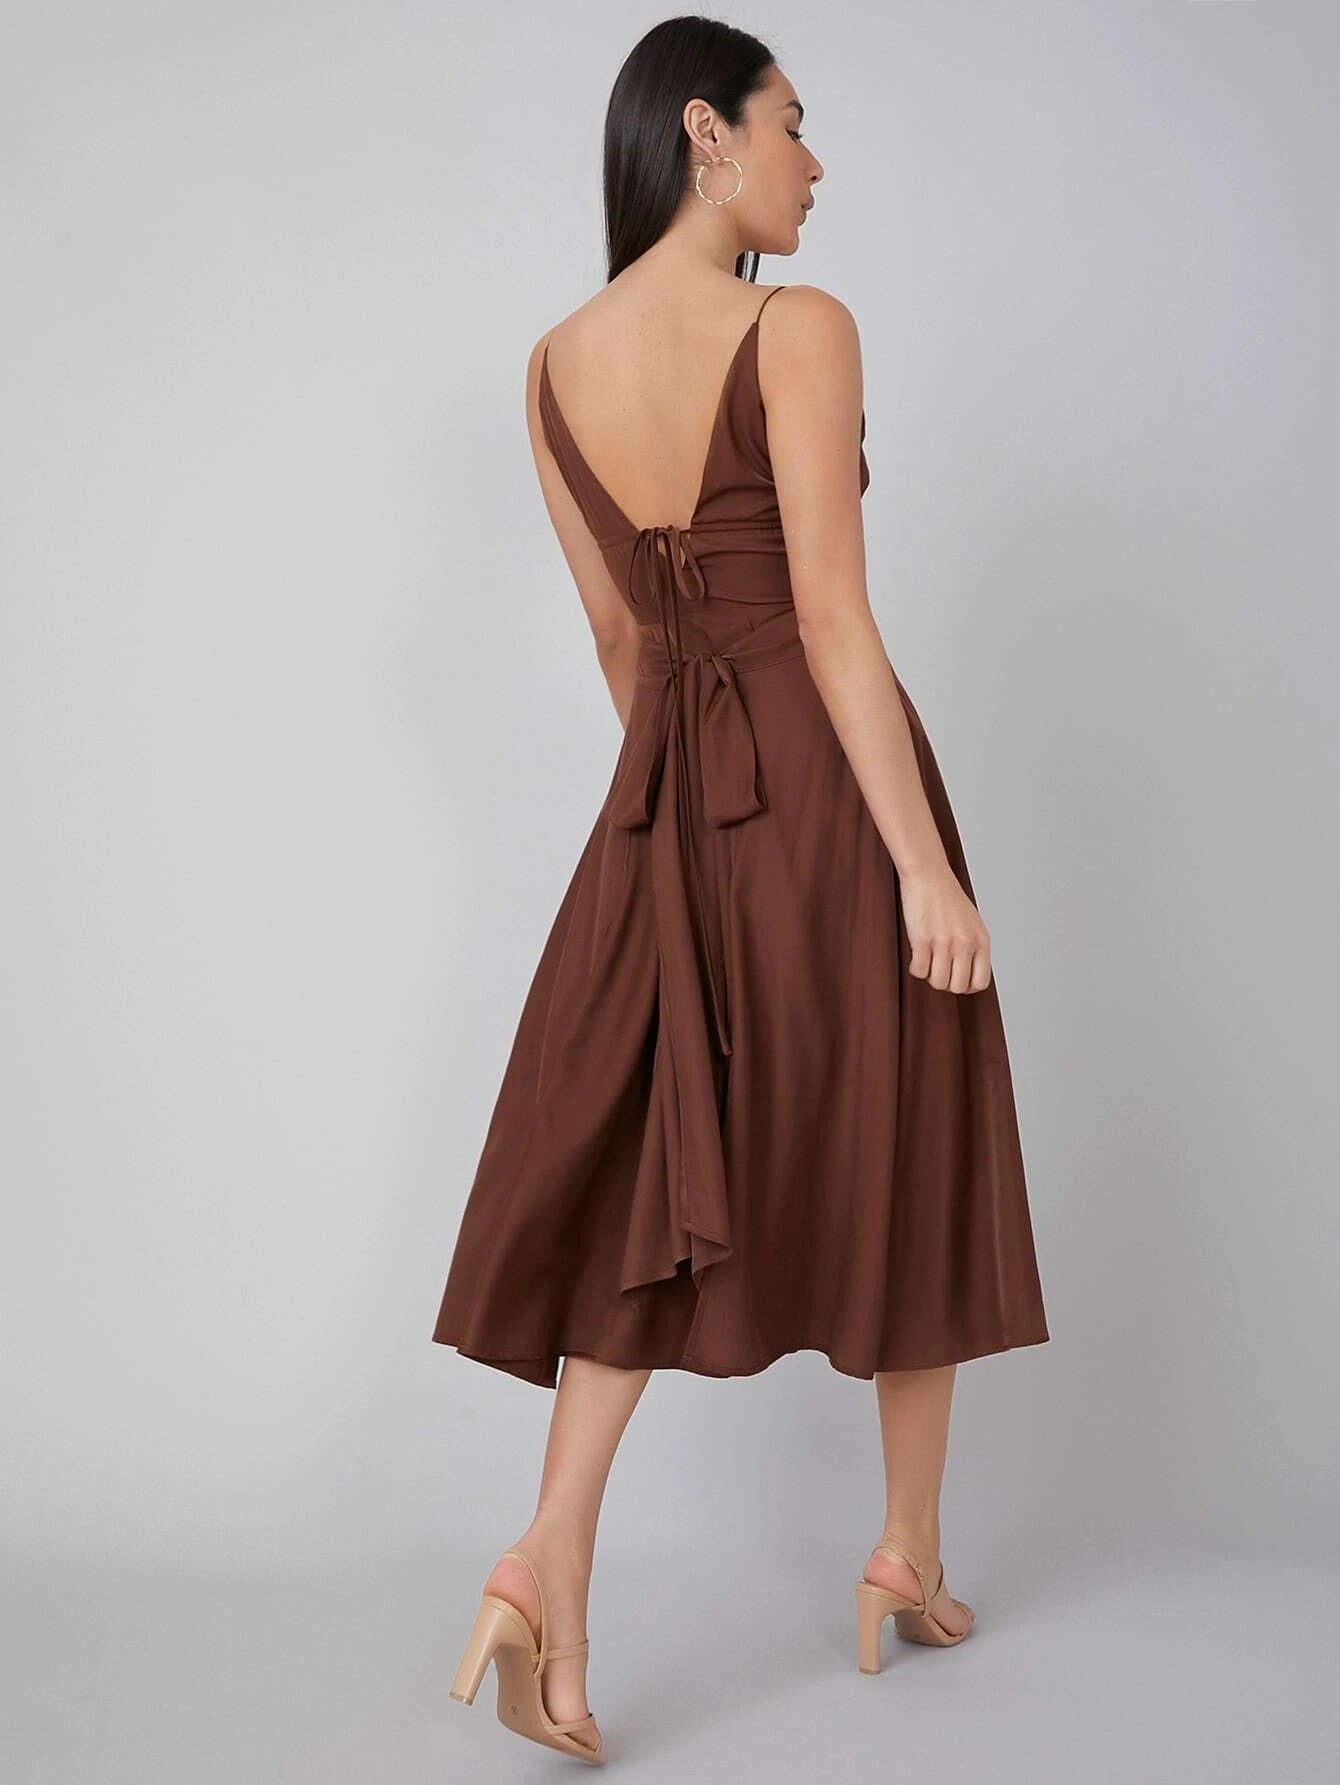 CM-ES106486 Women Elegant Seoul Style Viscose Sleeveless Plunging Neck Slip Dress - Coffee Brown